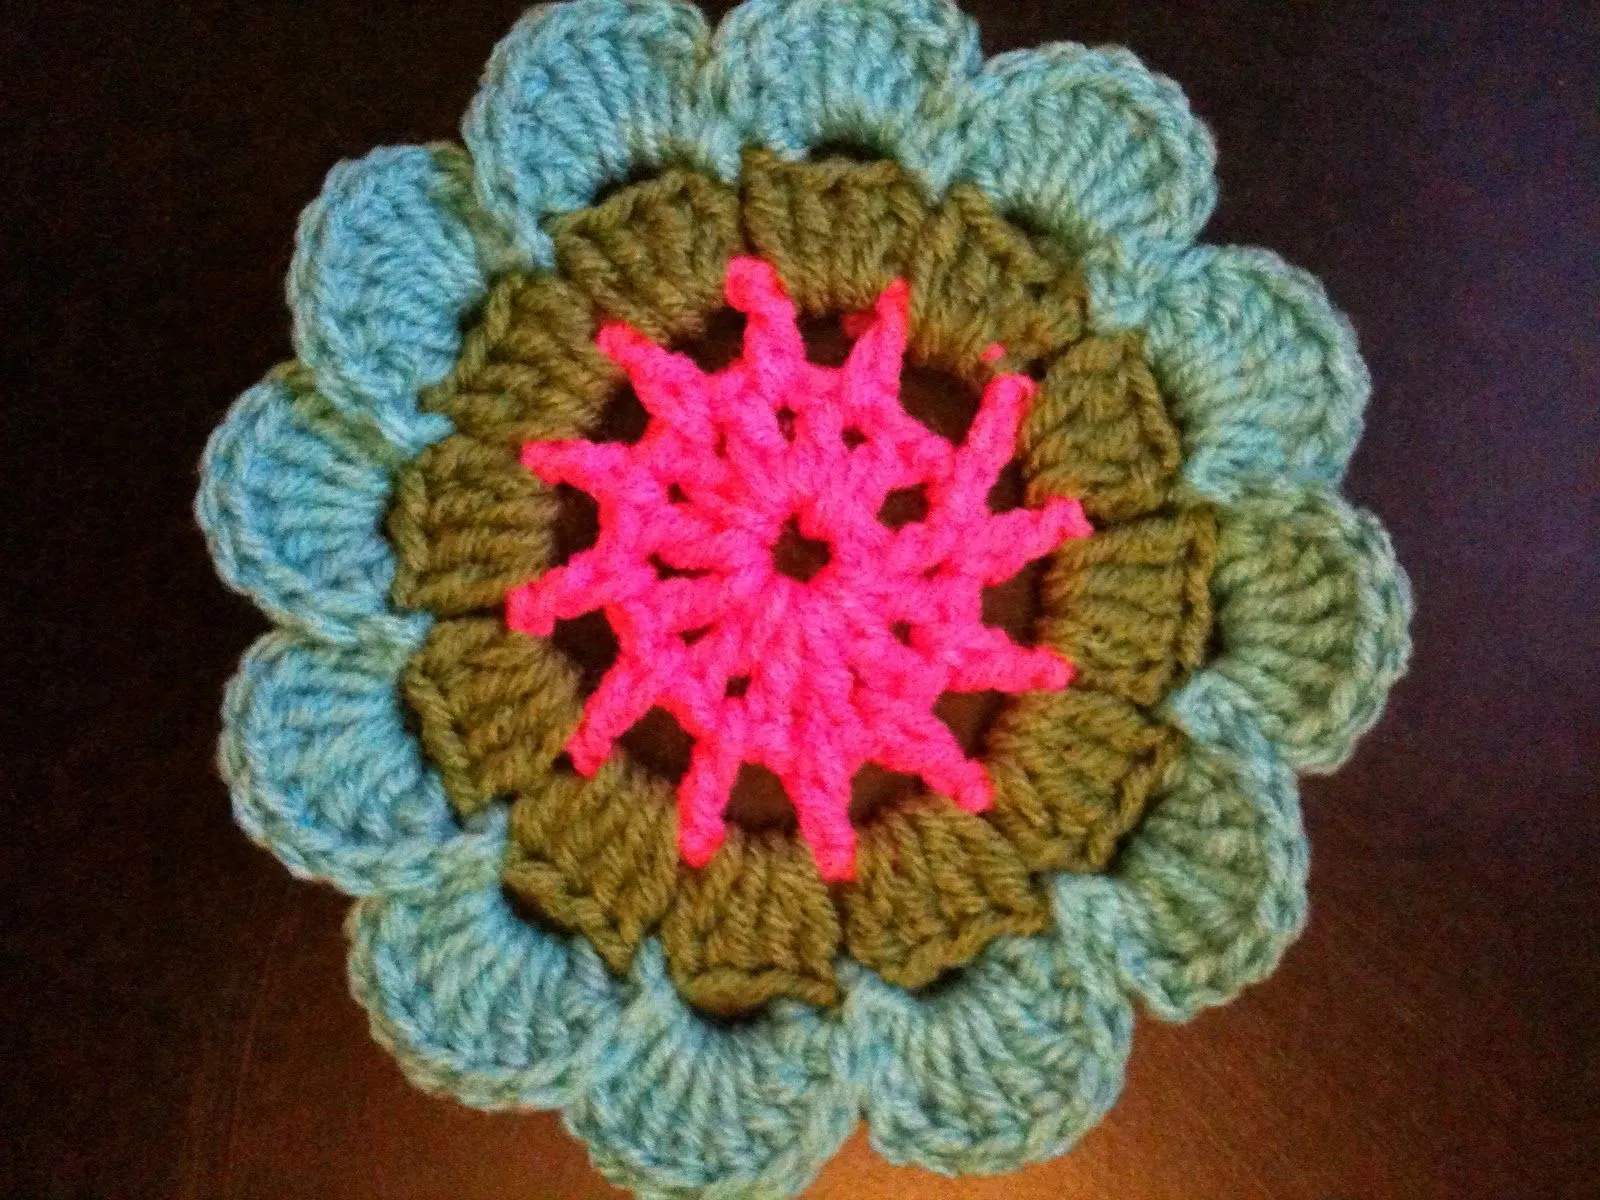 Crochet-ing Away: Japanese Flowers / Flores japonesas